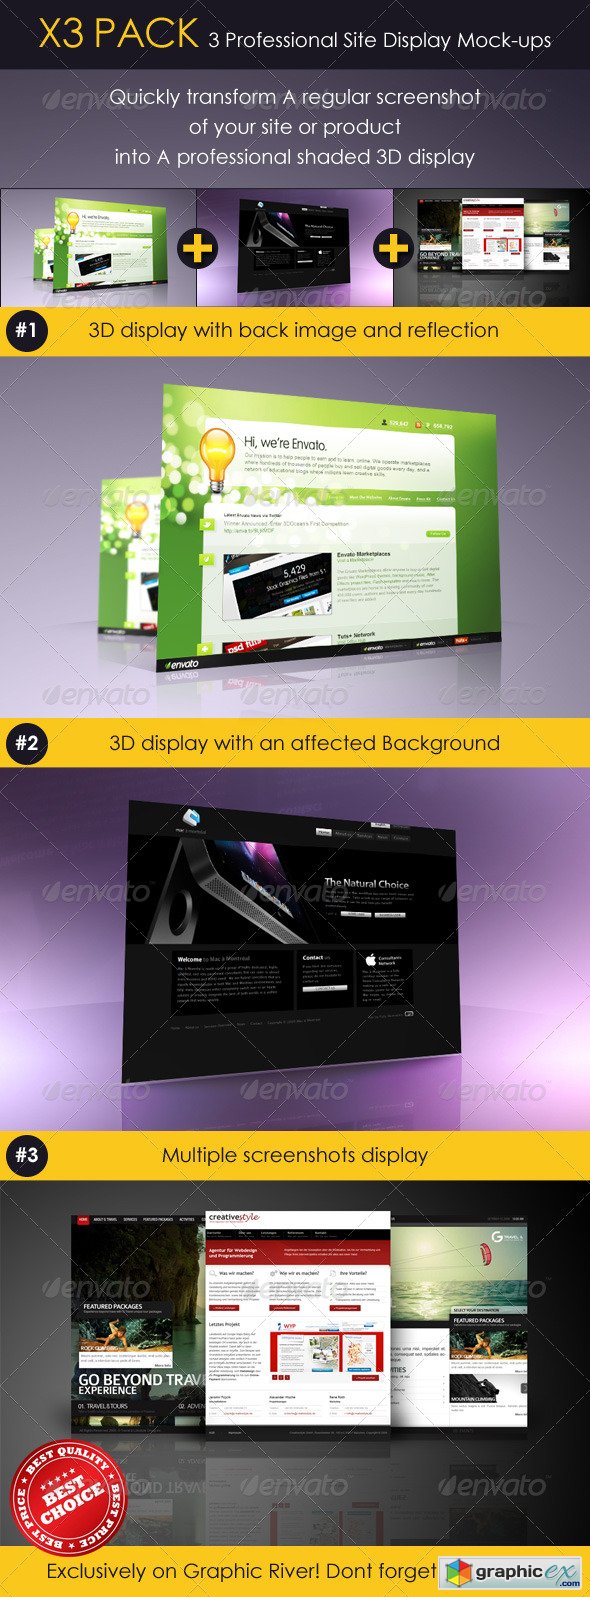 Professional 3d Web Display